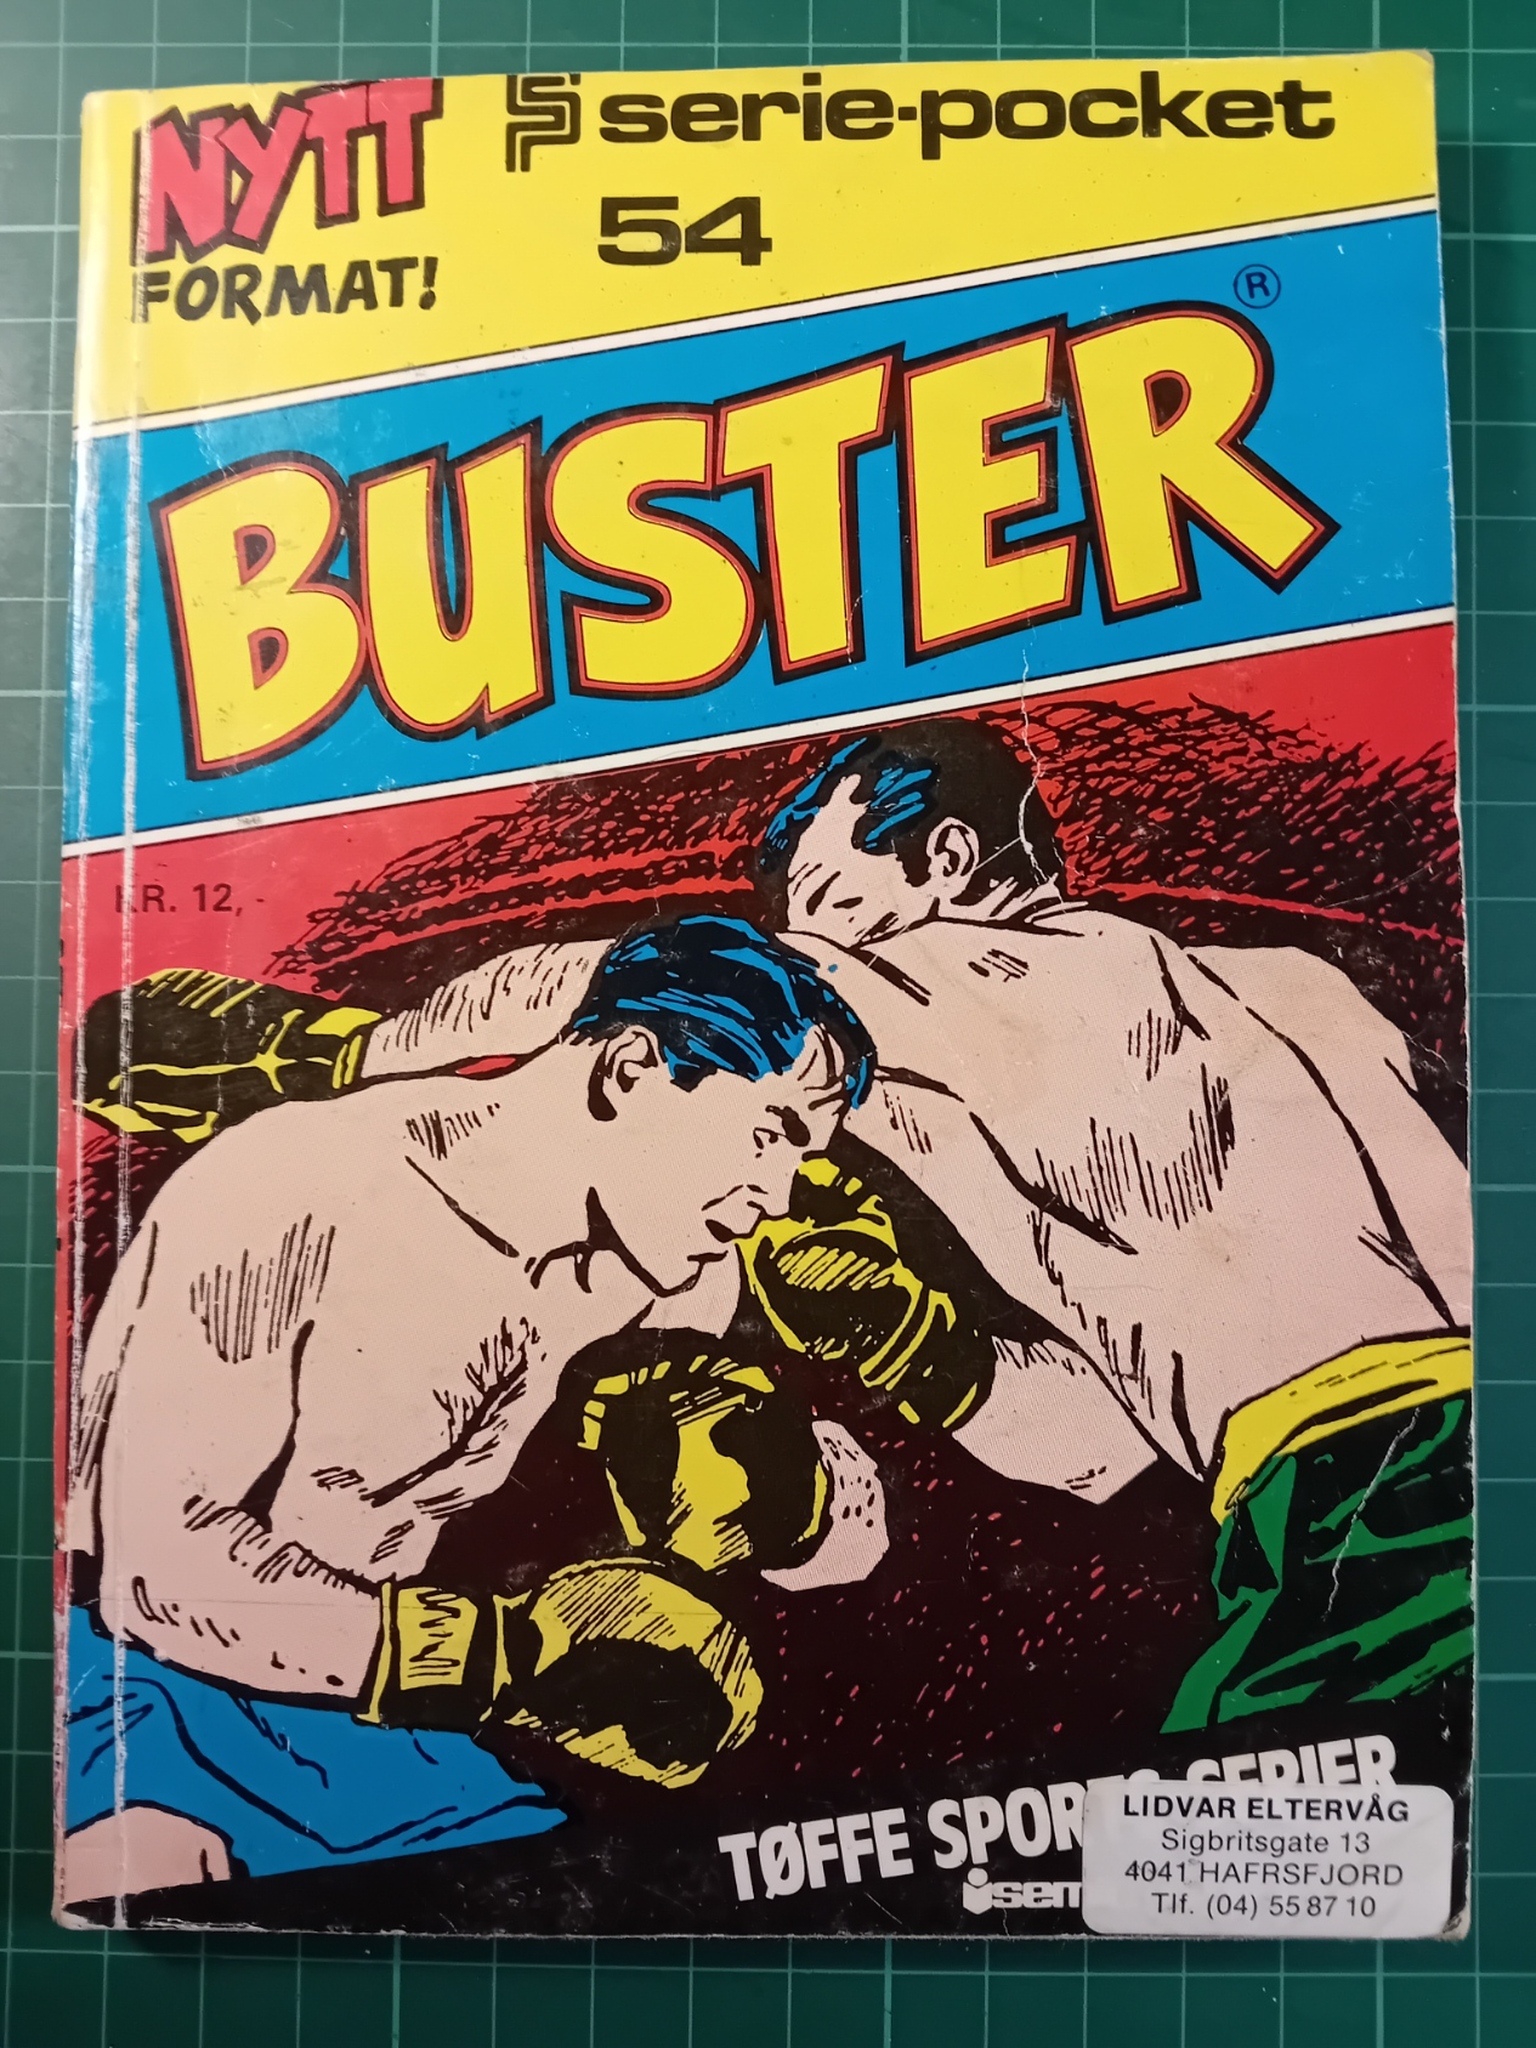 Serie-pocket 054 : Buster